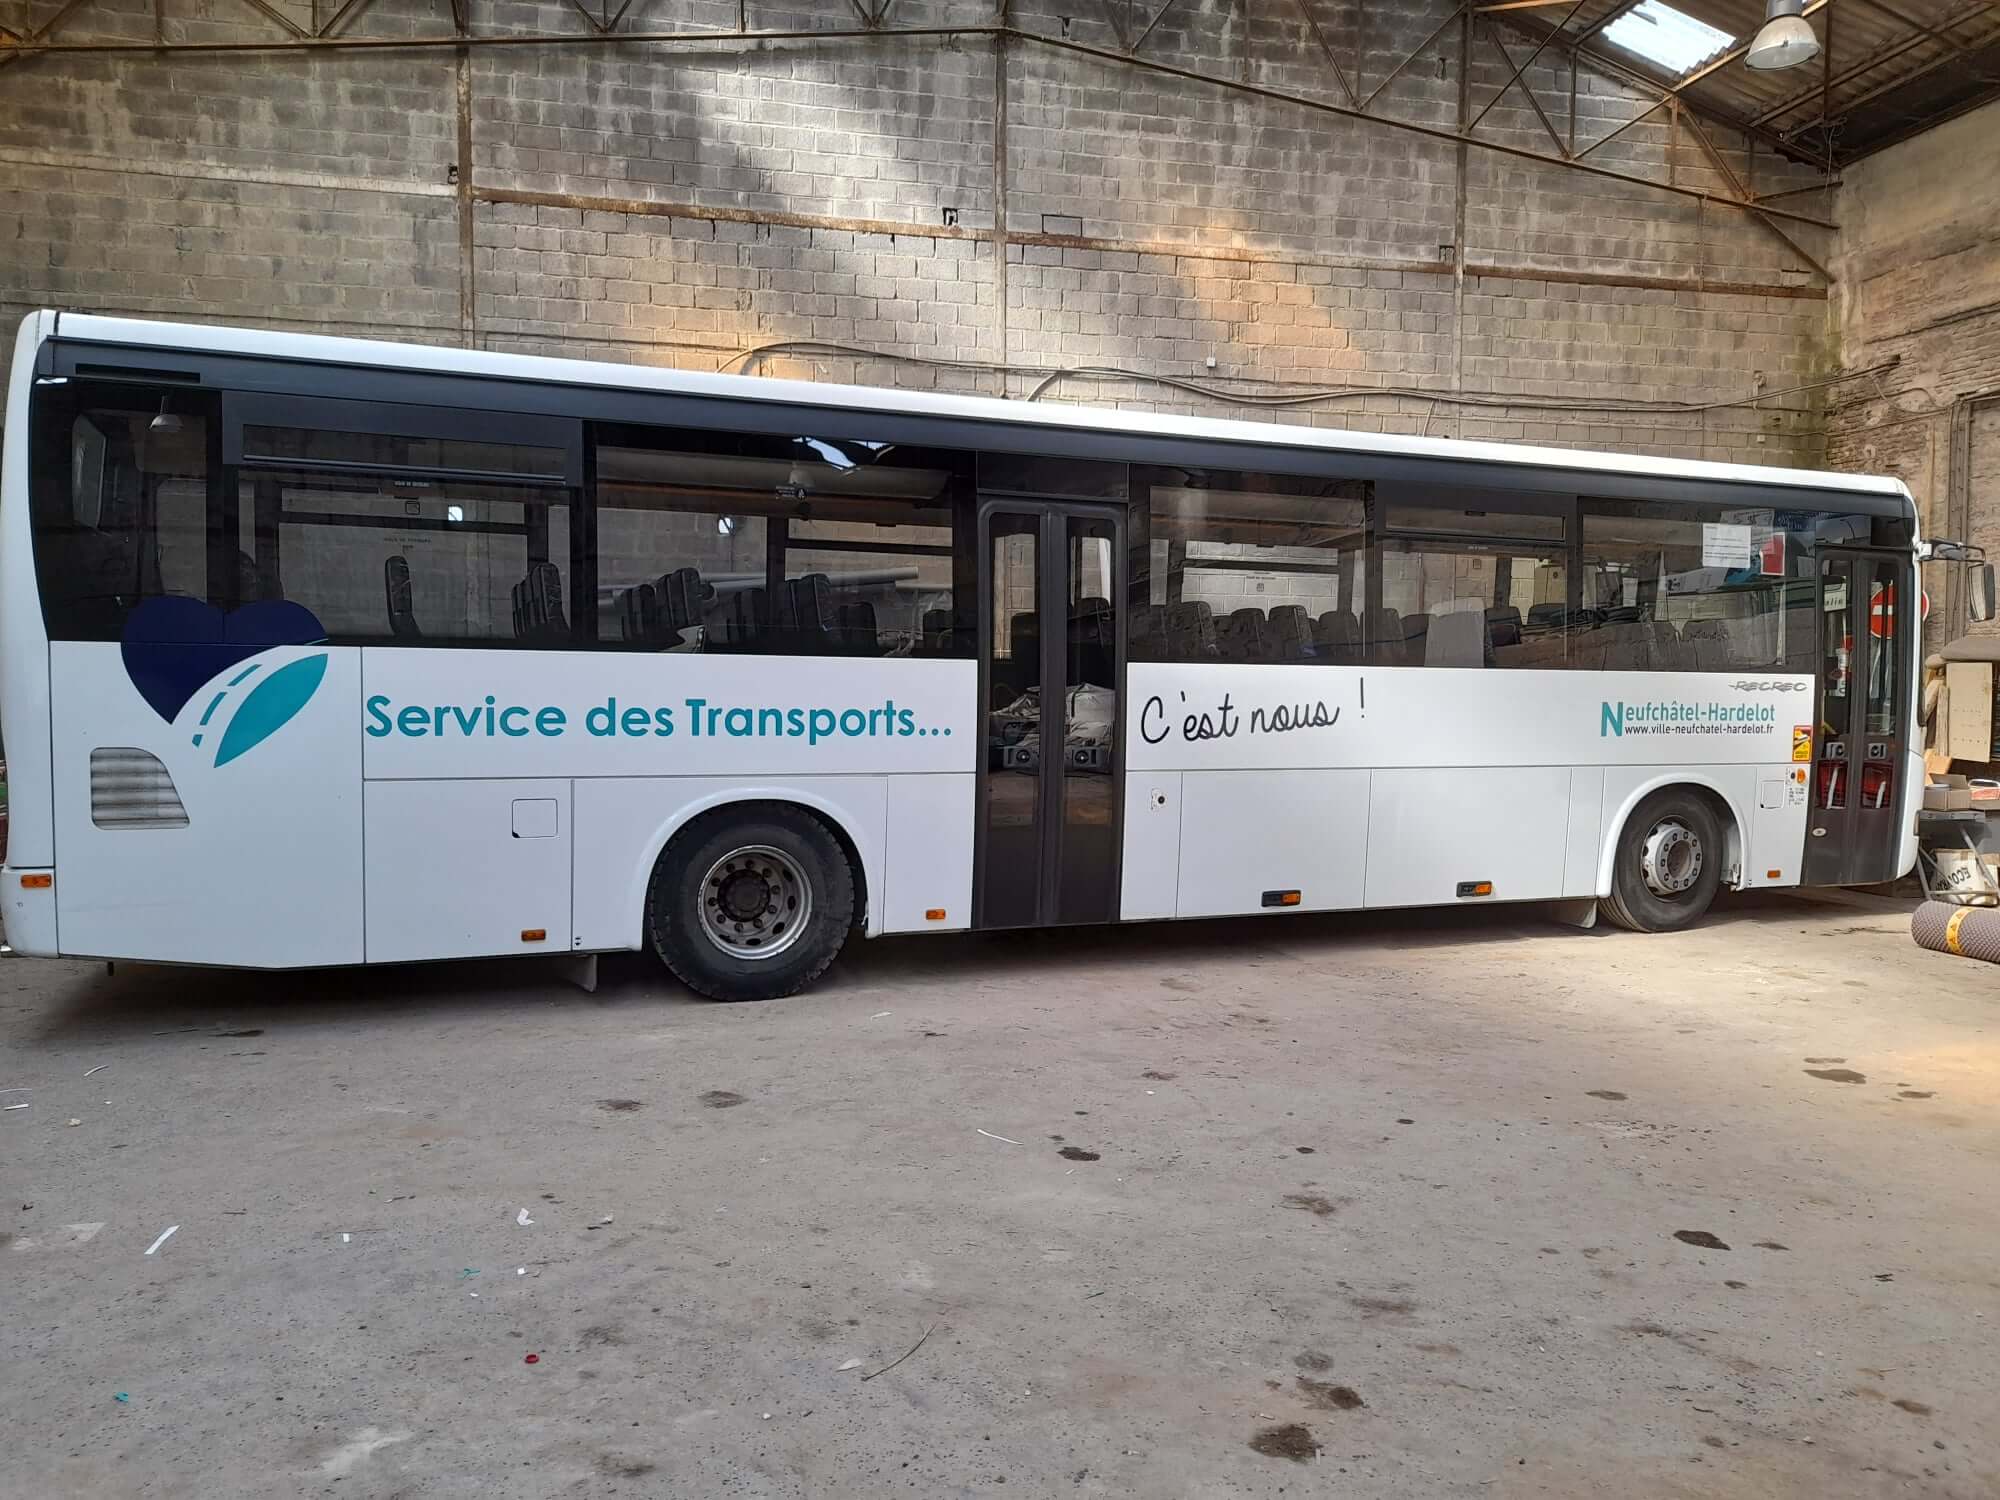 Véhicule Bus Service des transports Neufchatel Hardelot